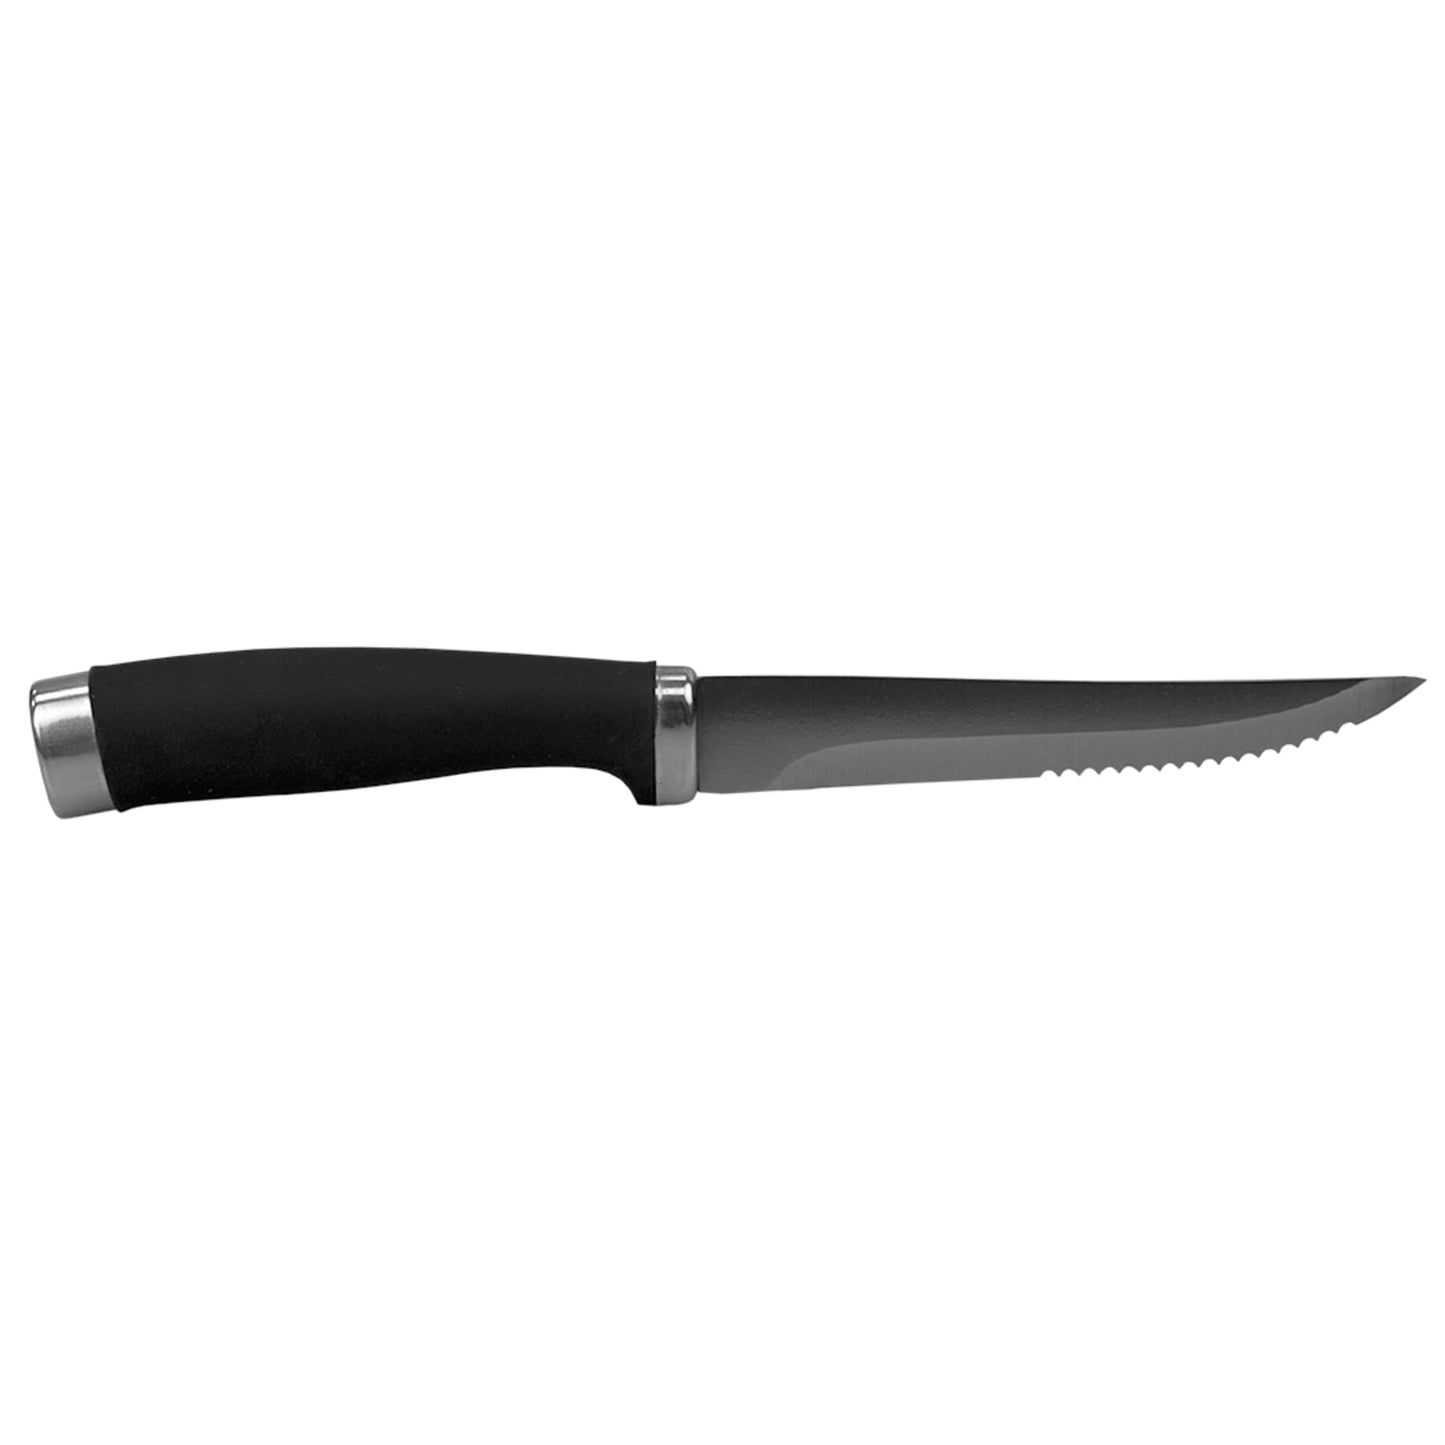 Stainless Steel Steak Knives with Non-Slip Handles, (Set of 4),  Black